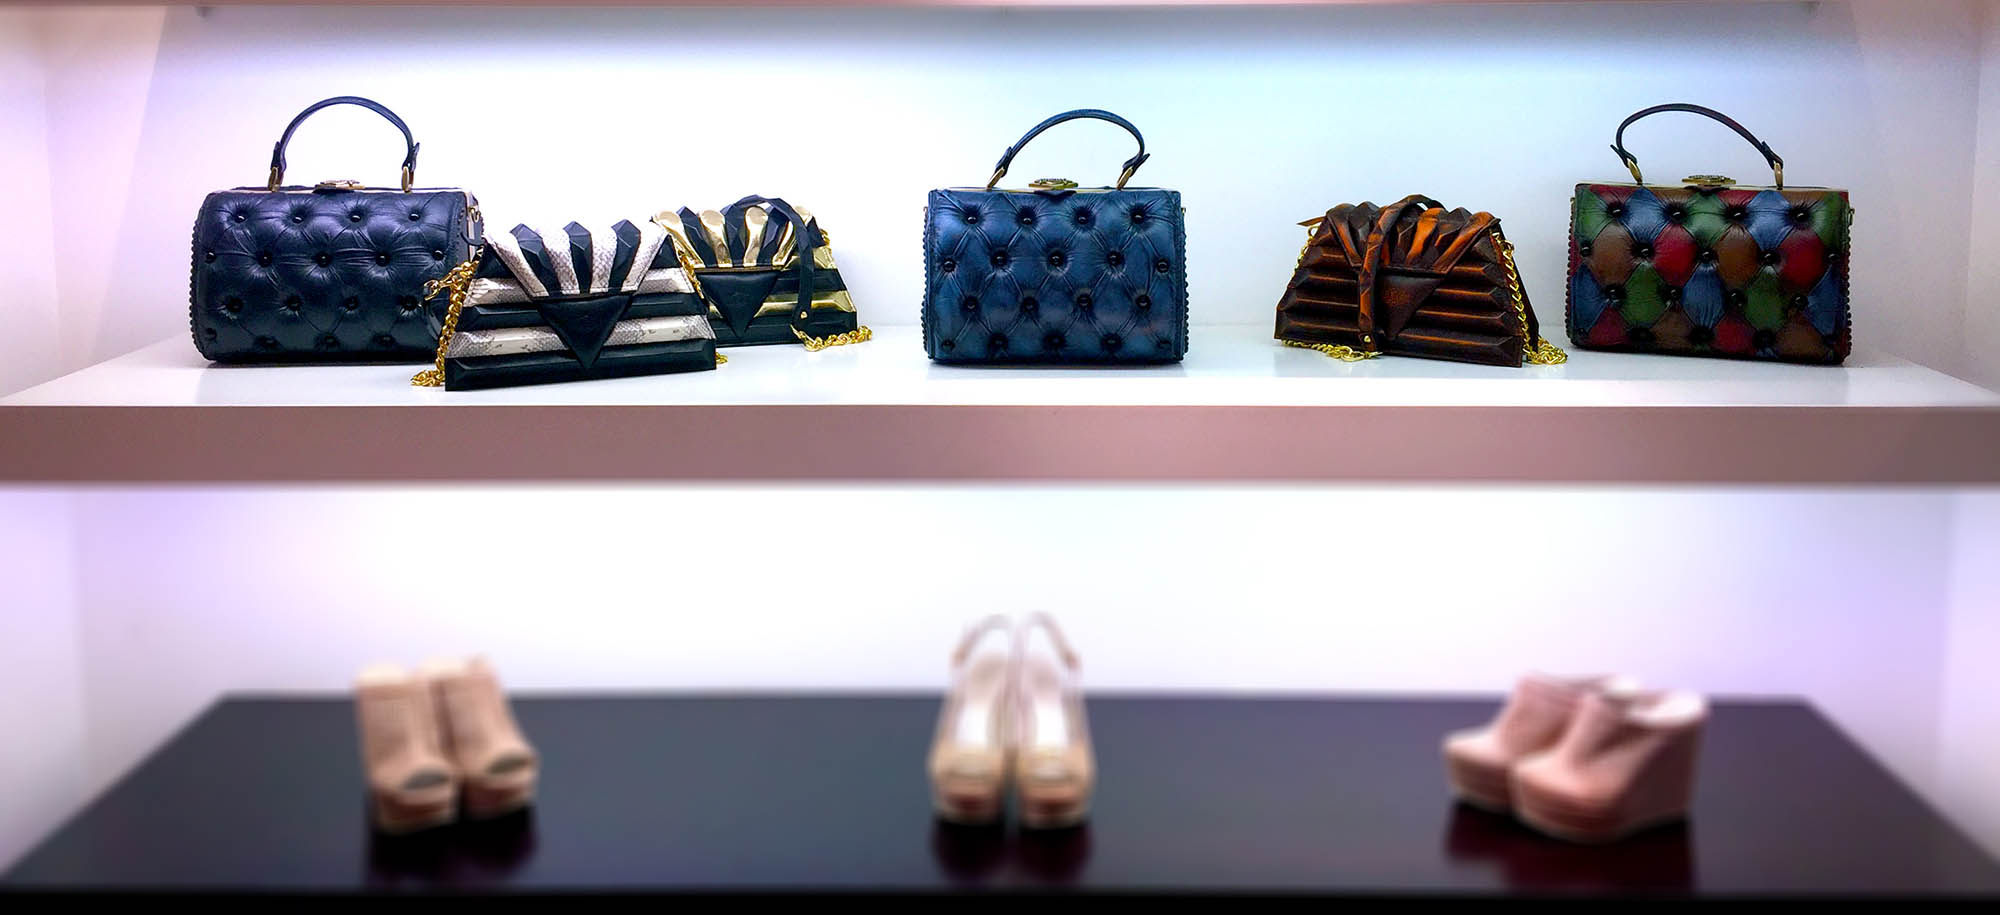 harleq bags luxury leathers paris shops